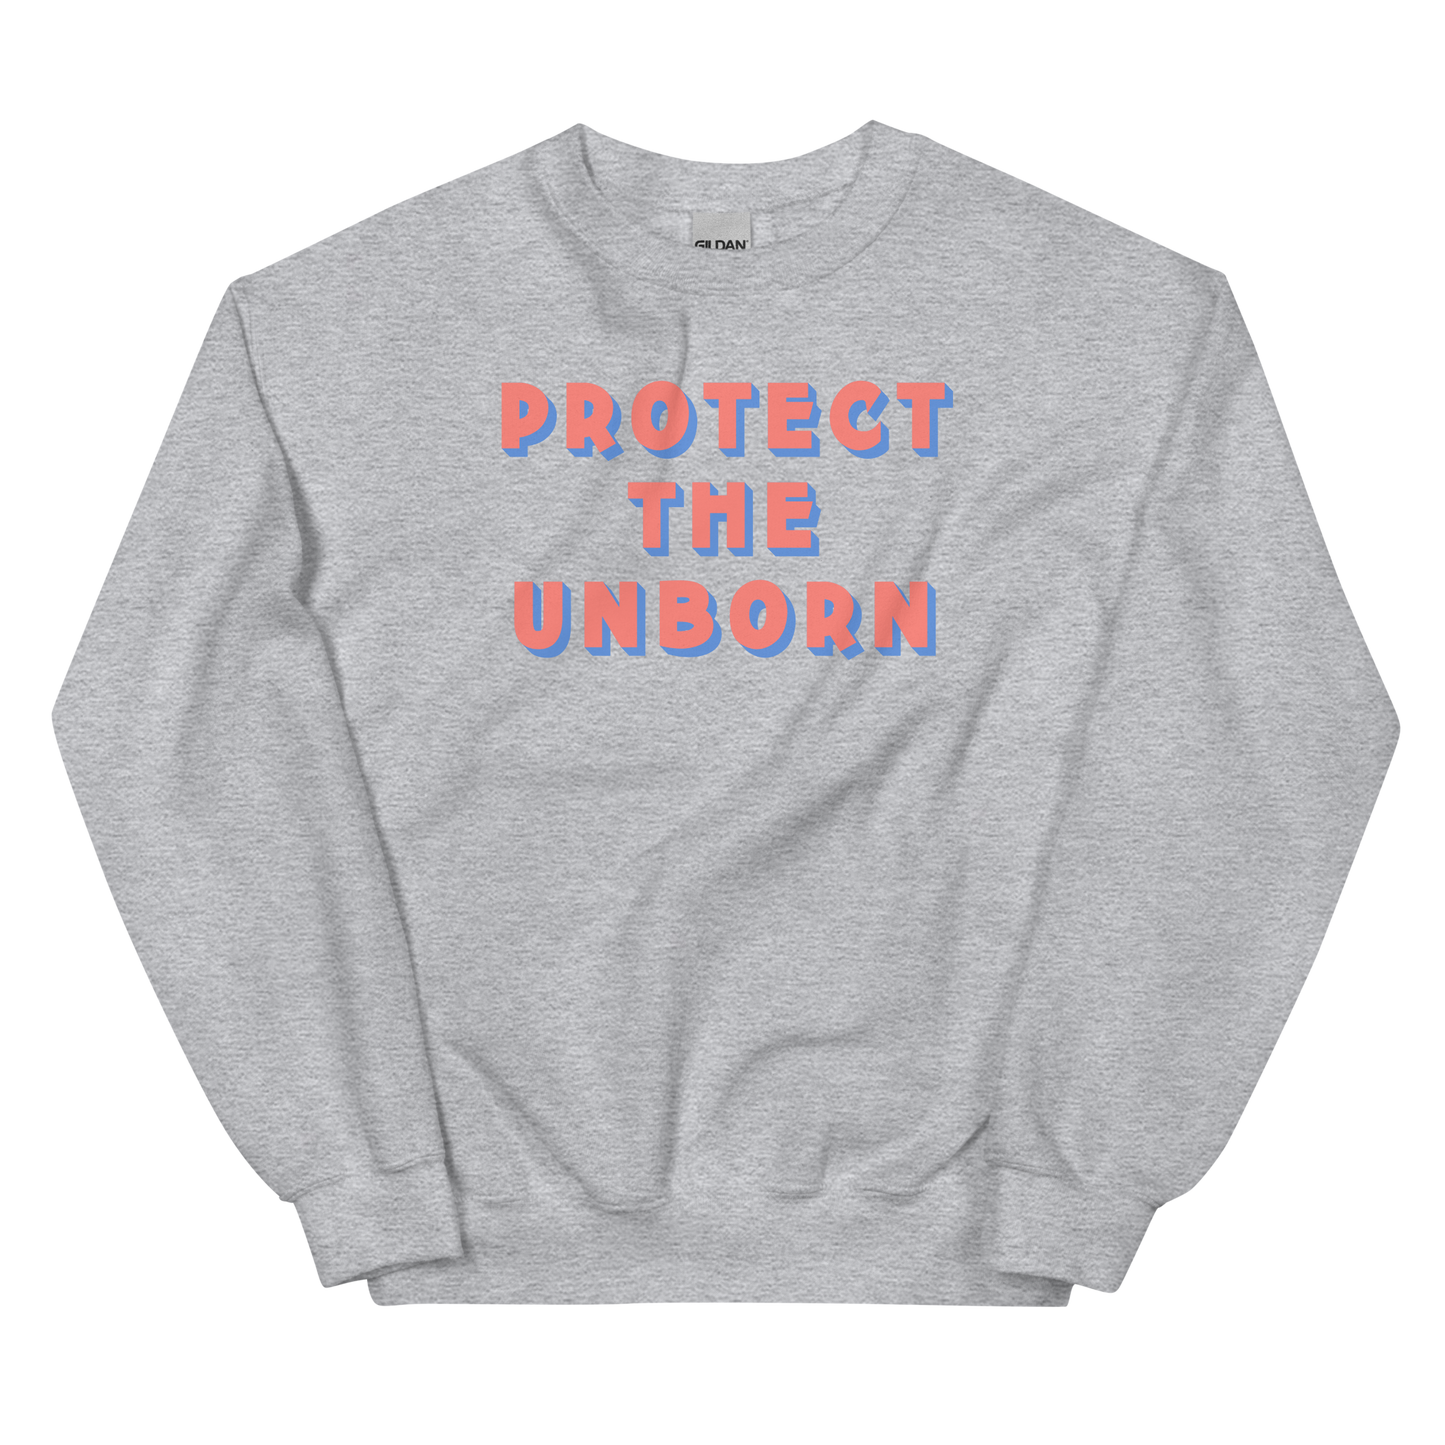 Protect The Unborn Sweatshirt